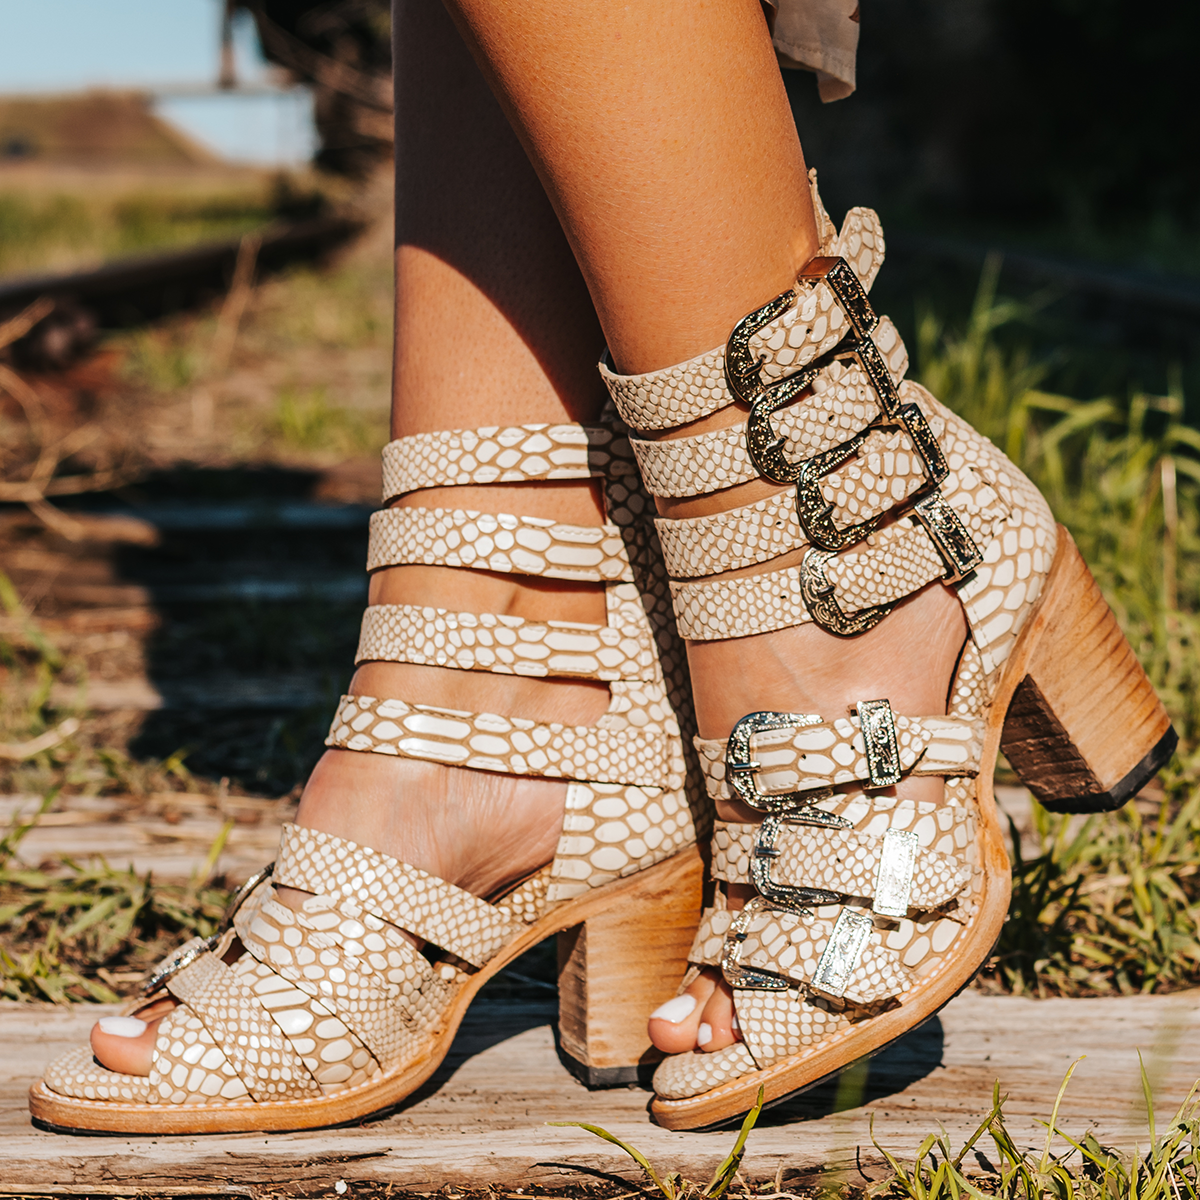 FREEBIRD women's Brooklynn white snake sandal with straps, metal western buckles and high-heel